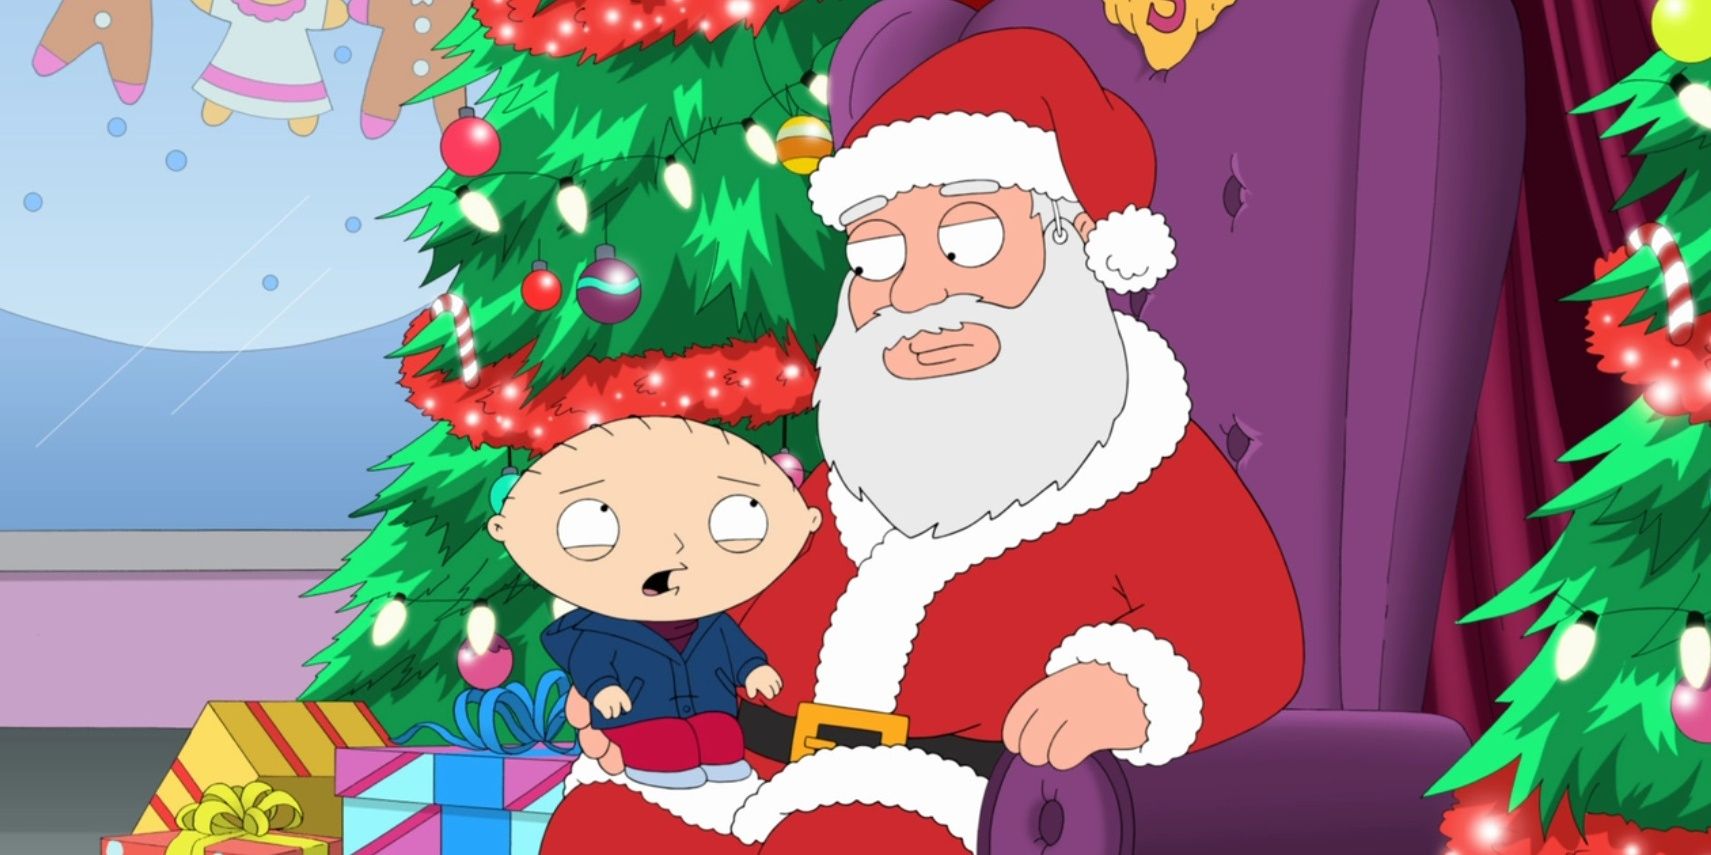 Stewie sitting on Santa's lap in Family Guy.